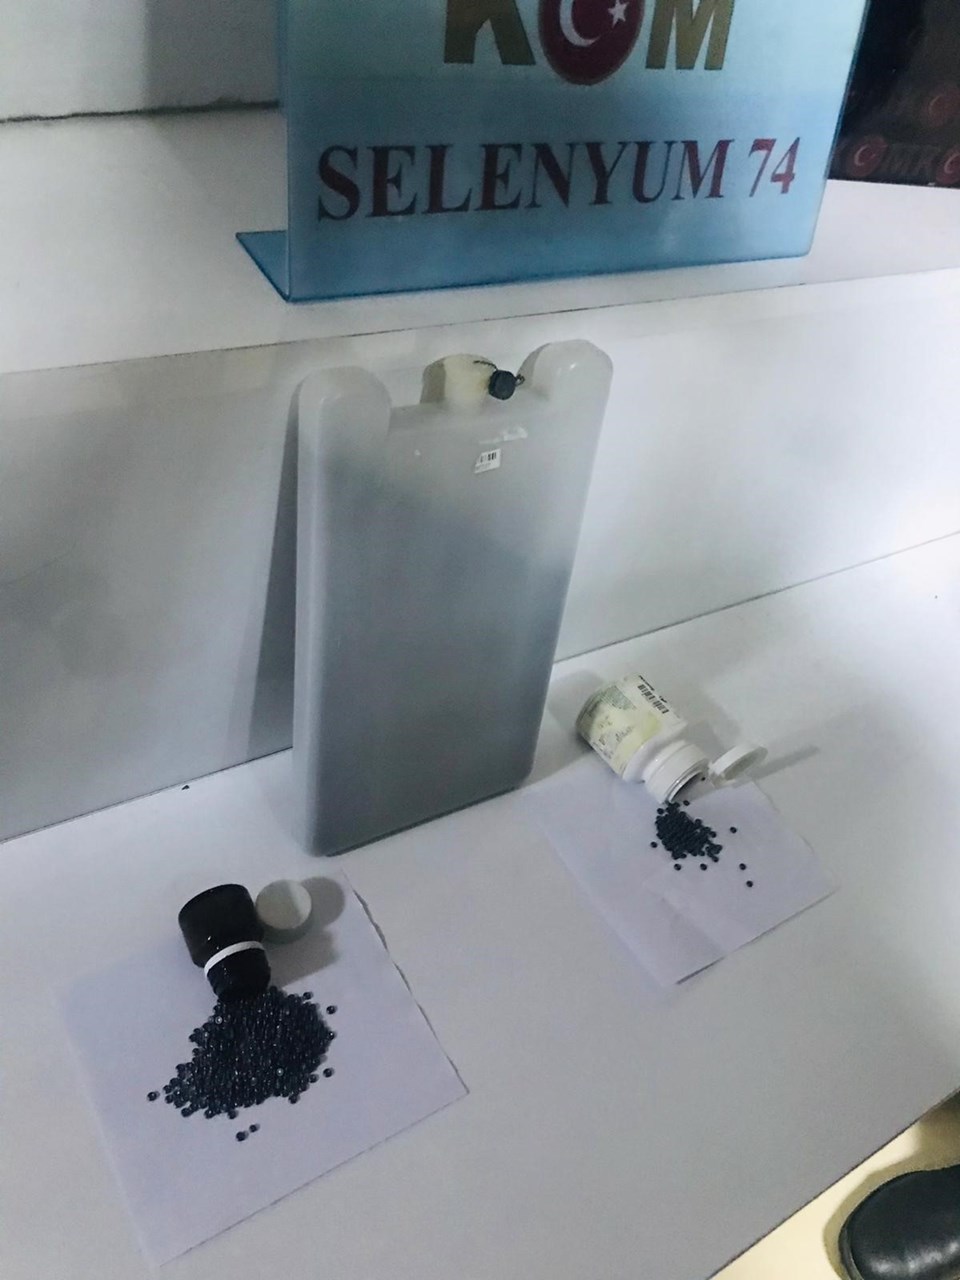 Hatay'da selenyum ele geçirildi: Piyasa değeri 15 milyon lira - 1